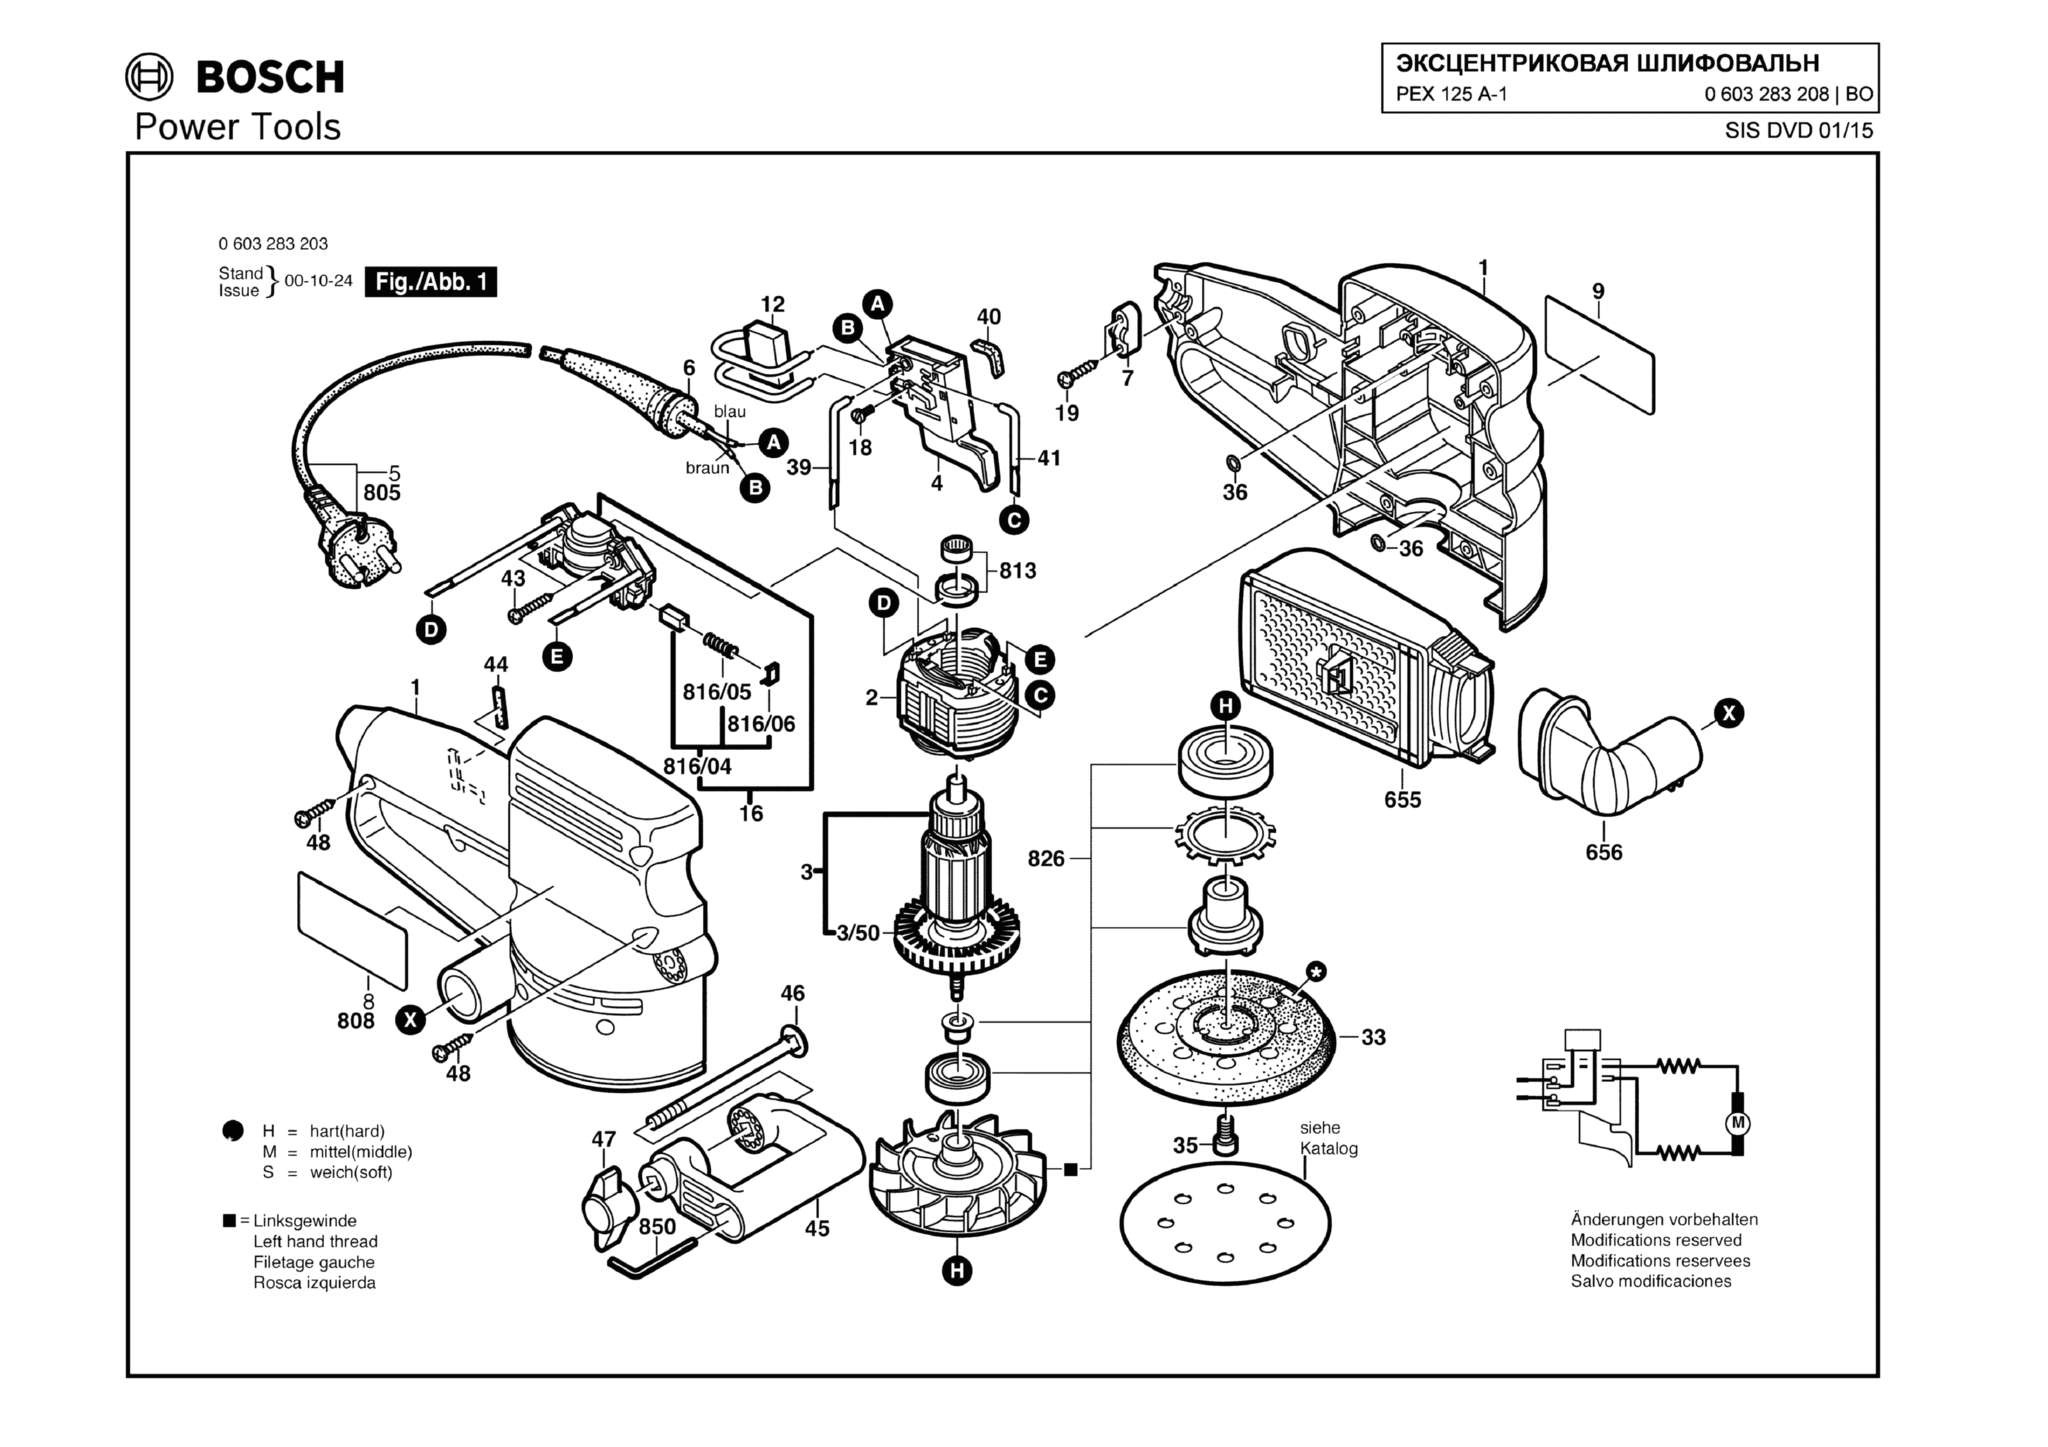 Запчасти, схема и деталировка Bosch PEX 125 A-1 (ТИП 0603283208)